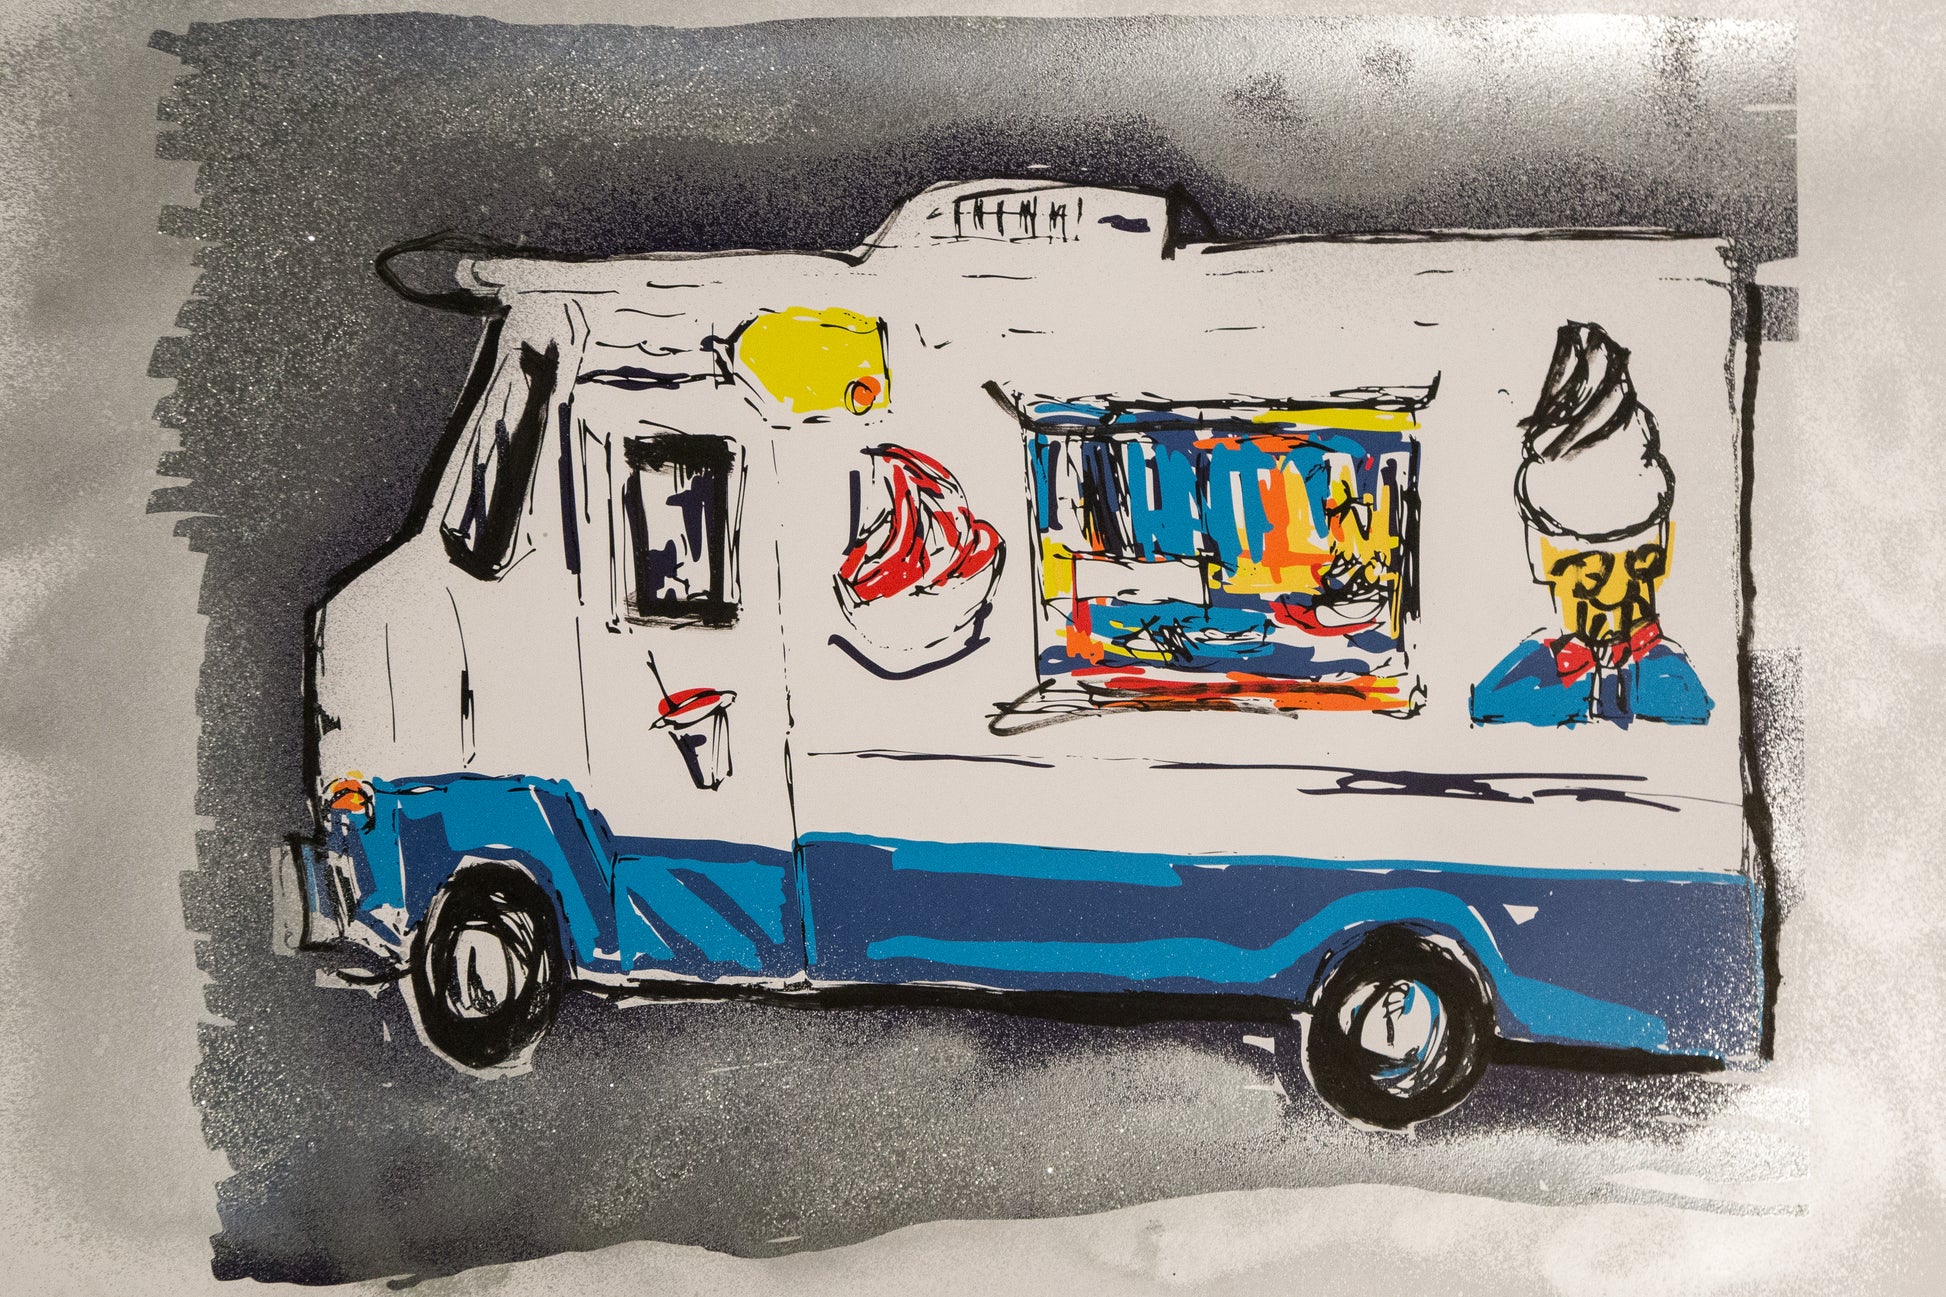 Ice Cream Truck 18 by M. Schorr - Mourlot Editions - Fine_Art - Poster - Lithograph - Wall Art - Vintage - Prints - Original